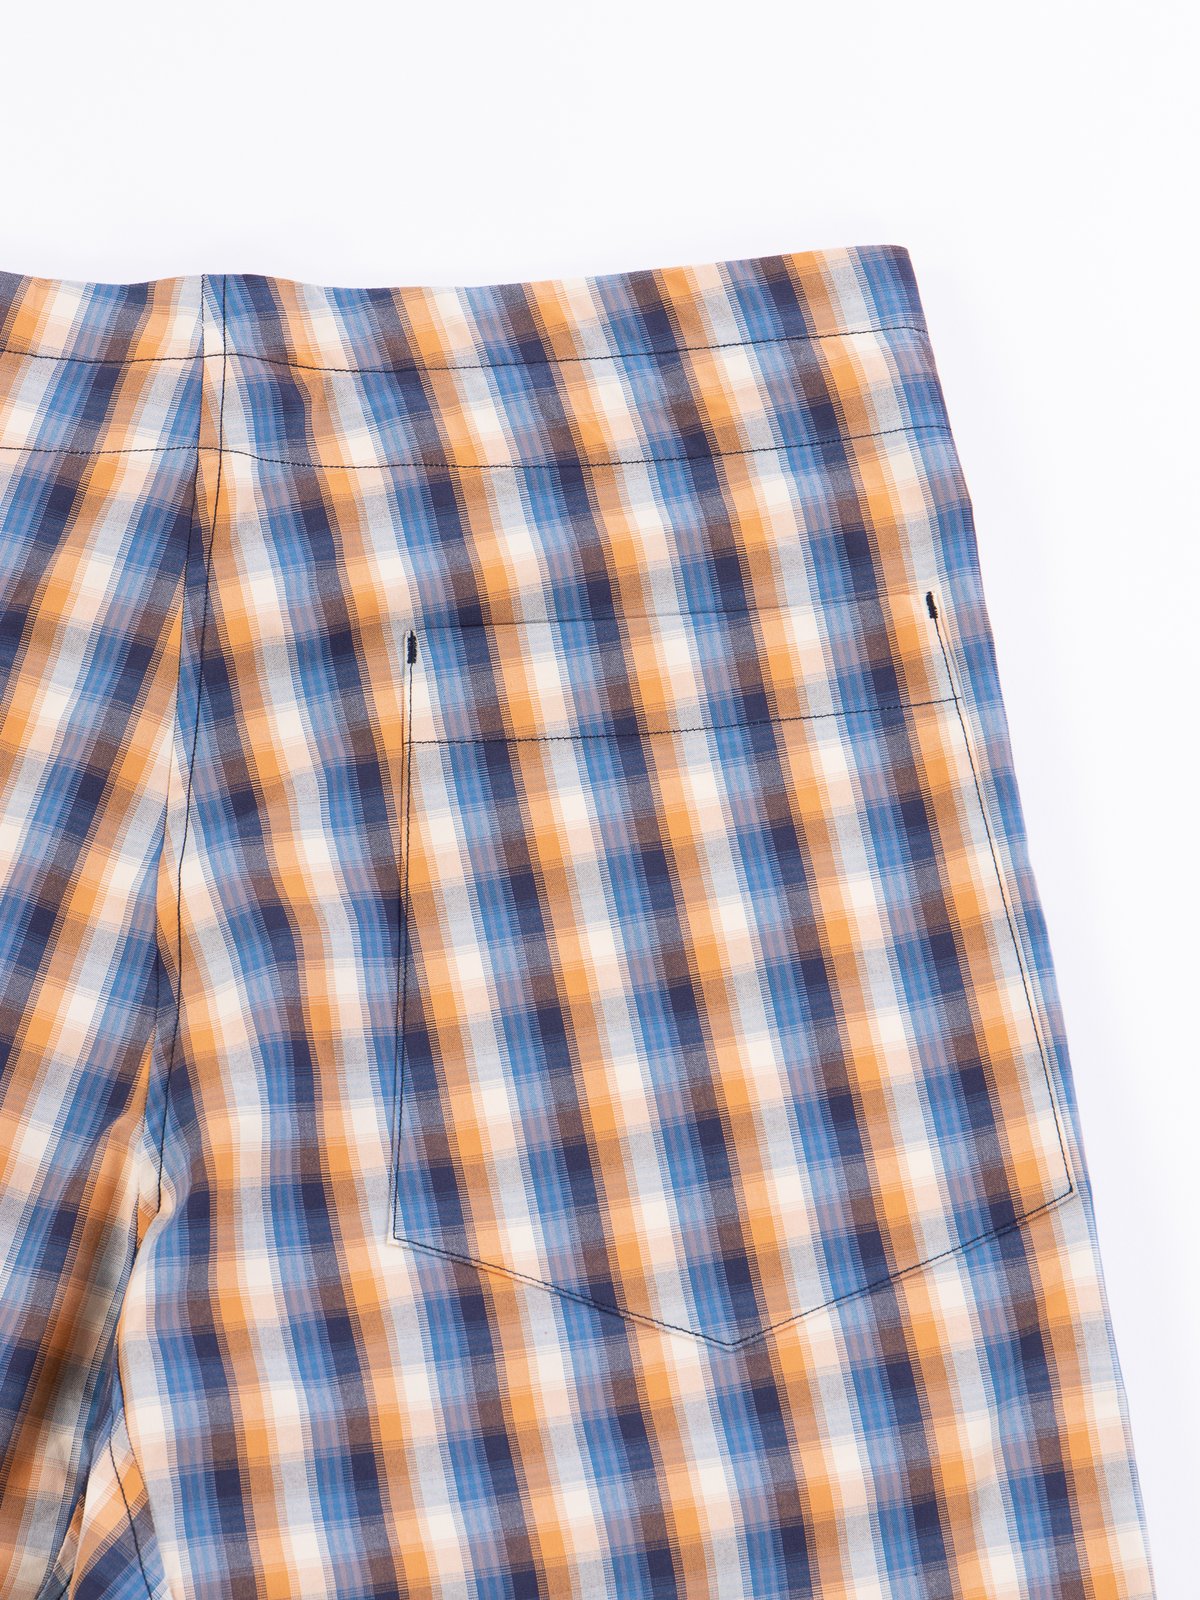 Blue/Orange Plaid Oxford Vancloth Drop Crotch Shorts - Image 5